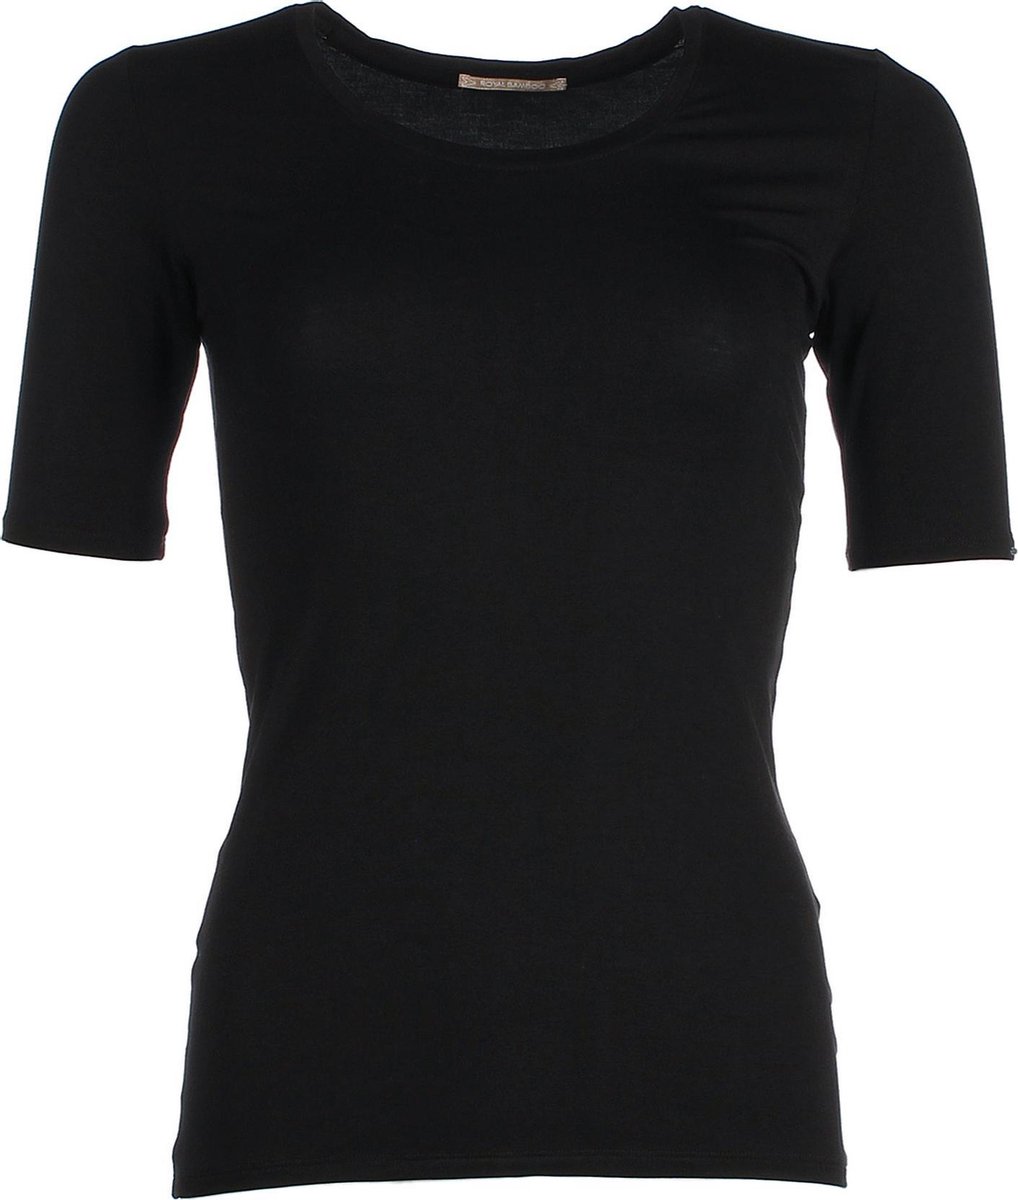 The Original Shortsleeve Shirt - Black - Large - bamboe kleding dames